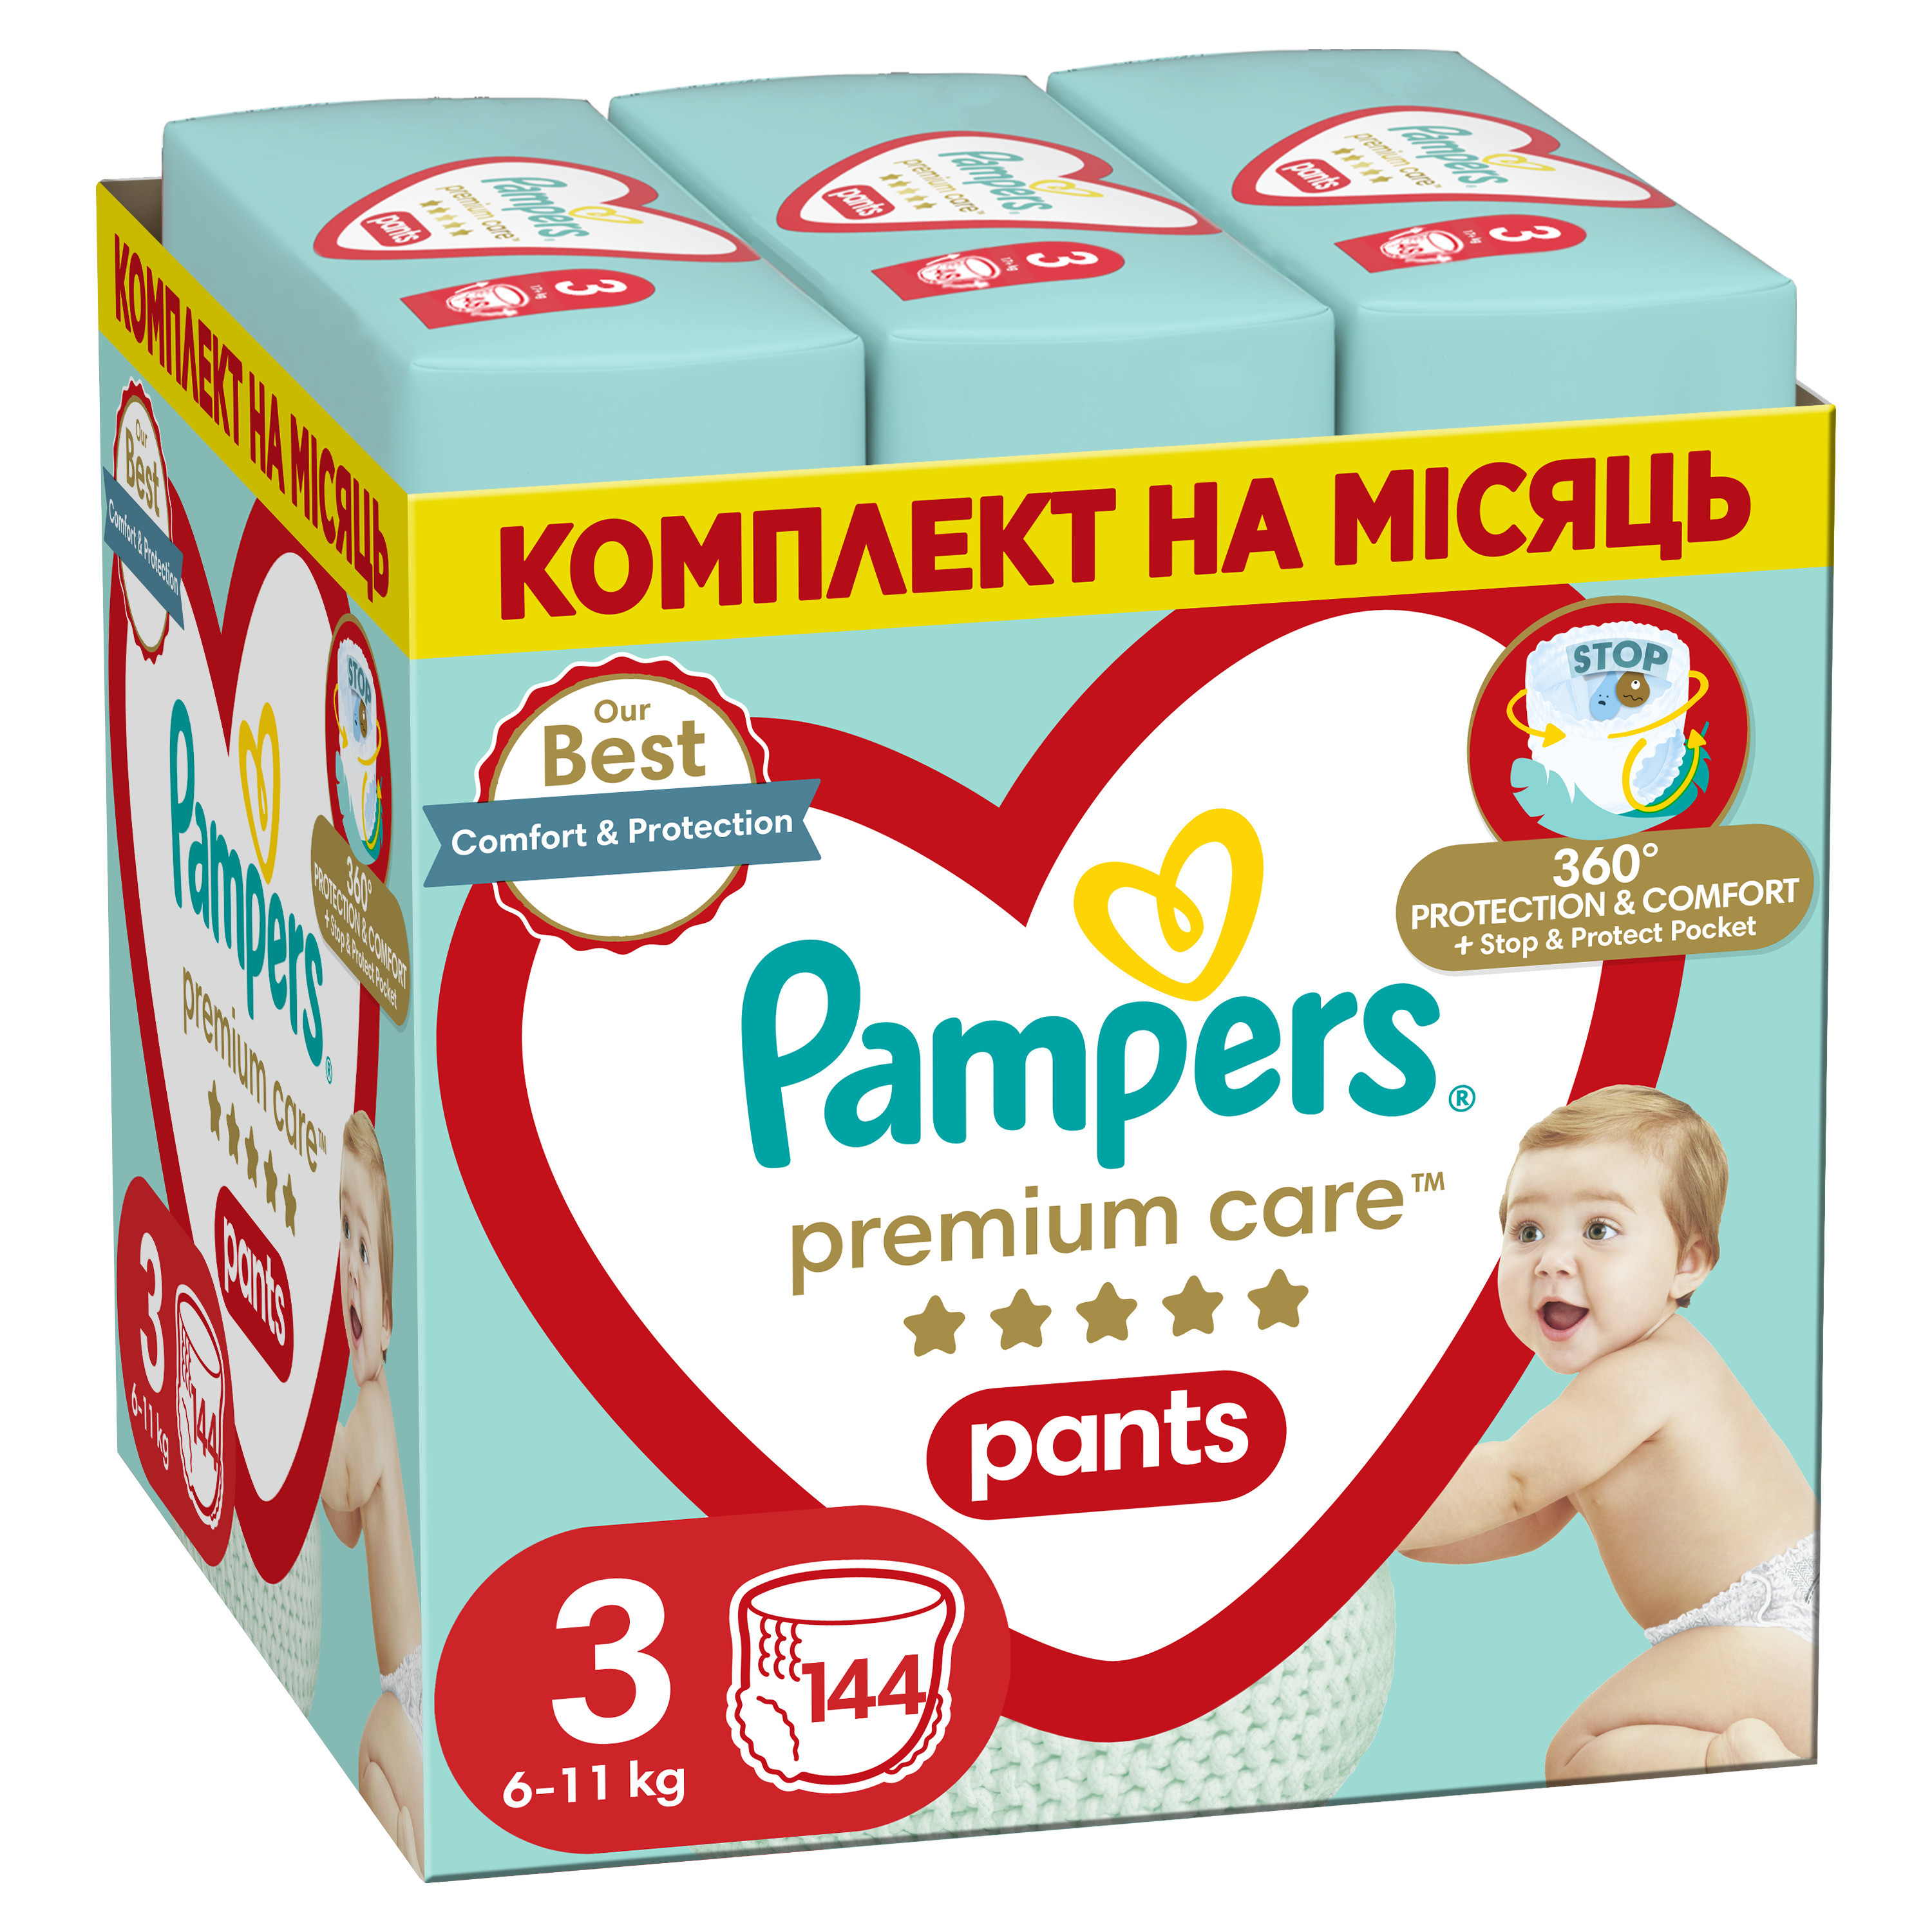 Підгузки-трусики Pampers Premium Care Pants Midi 3 (6-11 кг) 144 шт. - фото 1